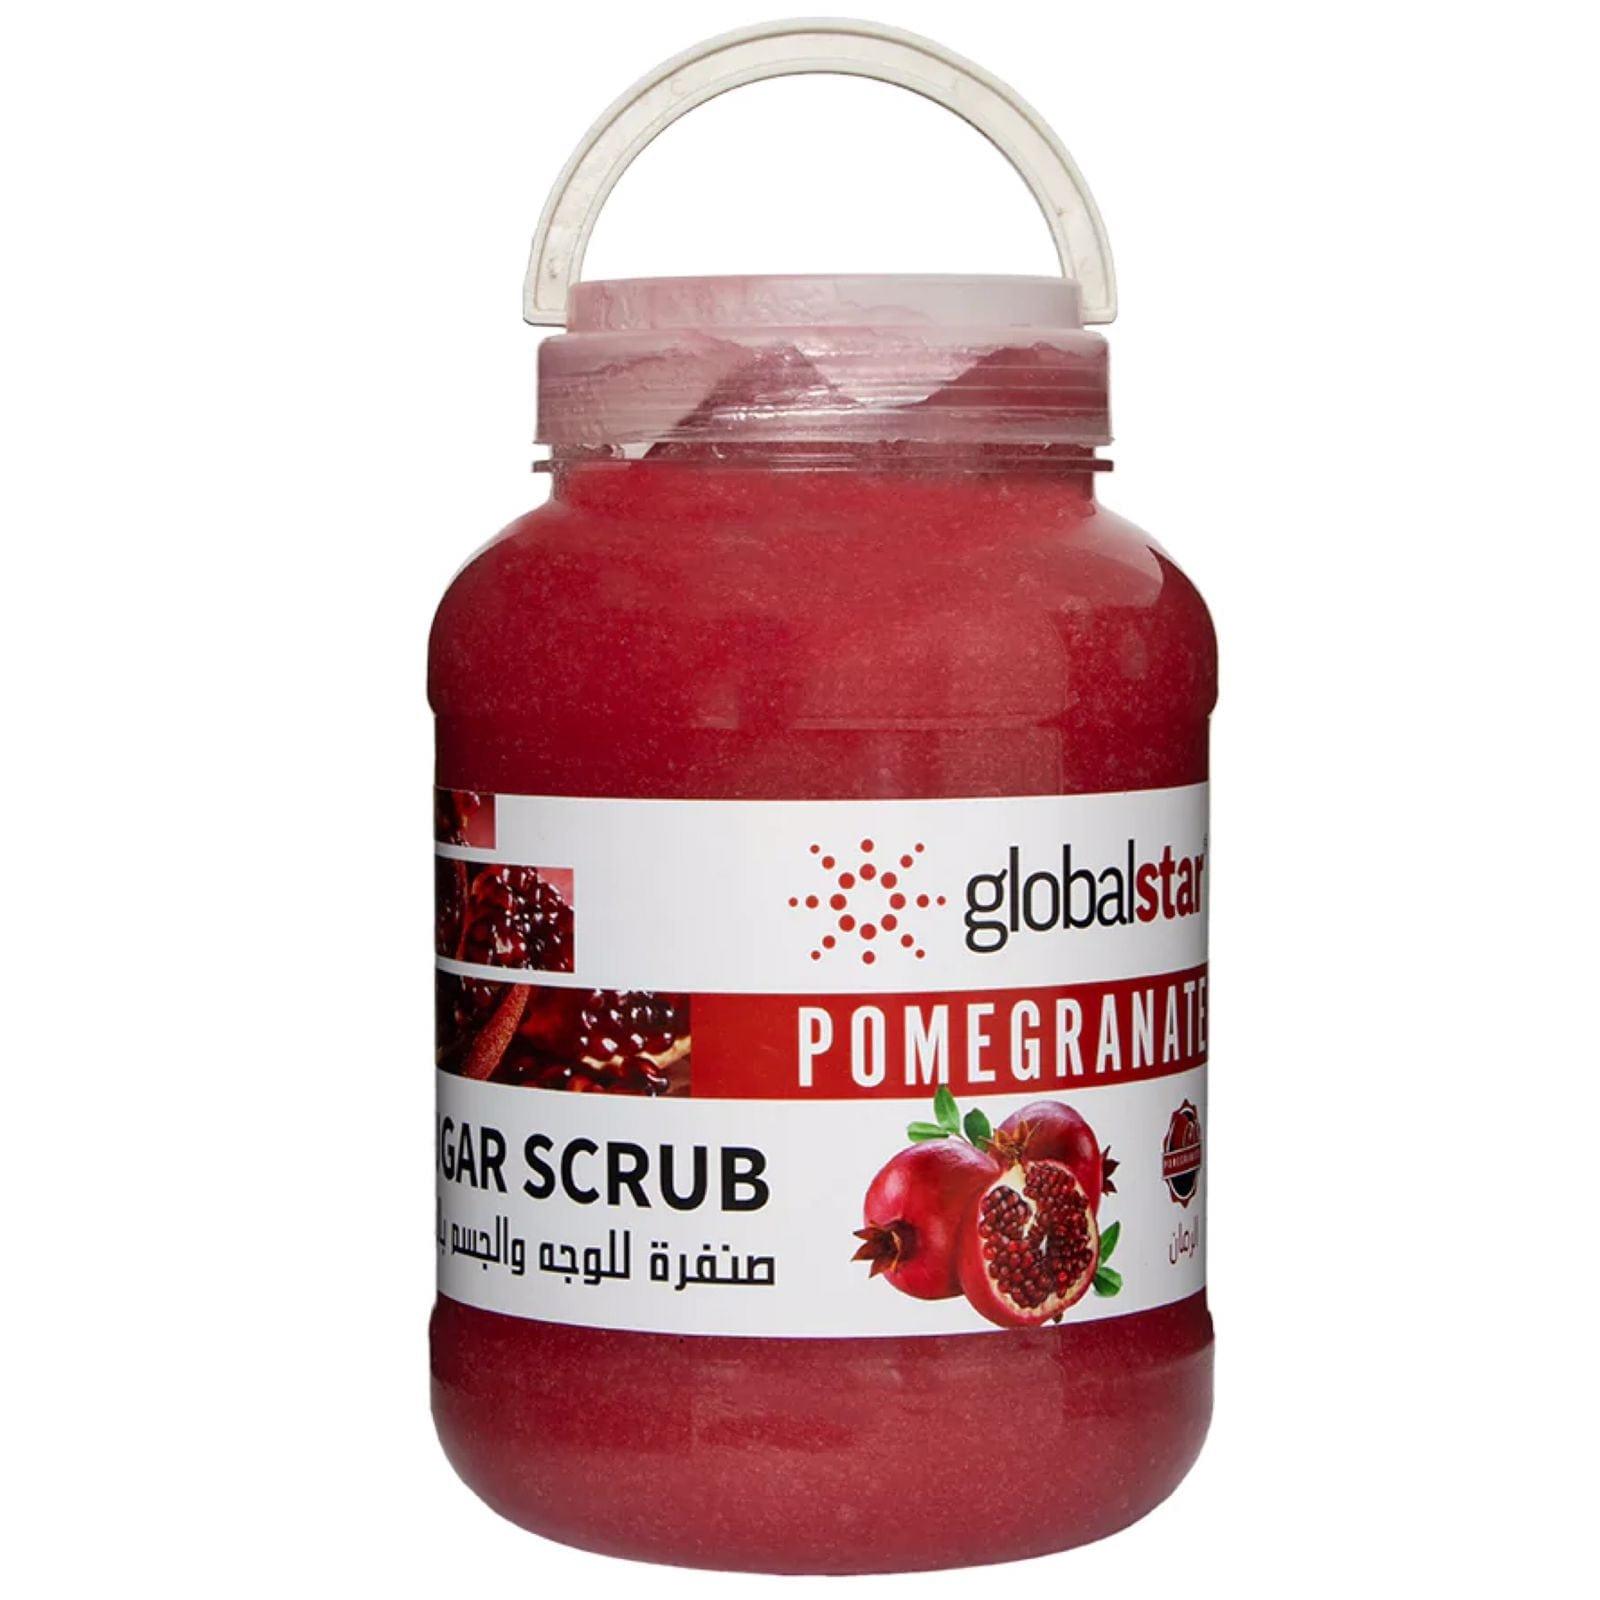 Globalstar Pomegranate Sugar Scrub 5kg